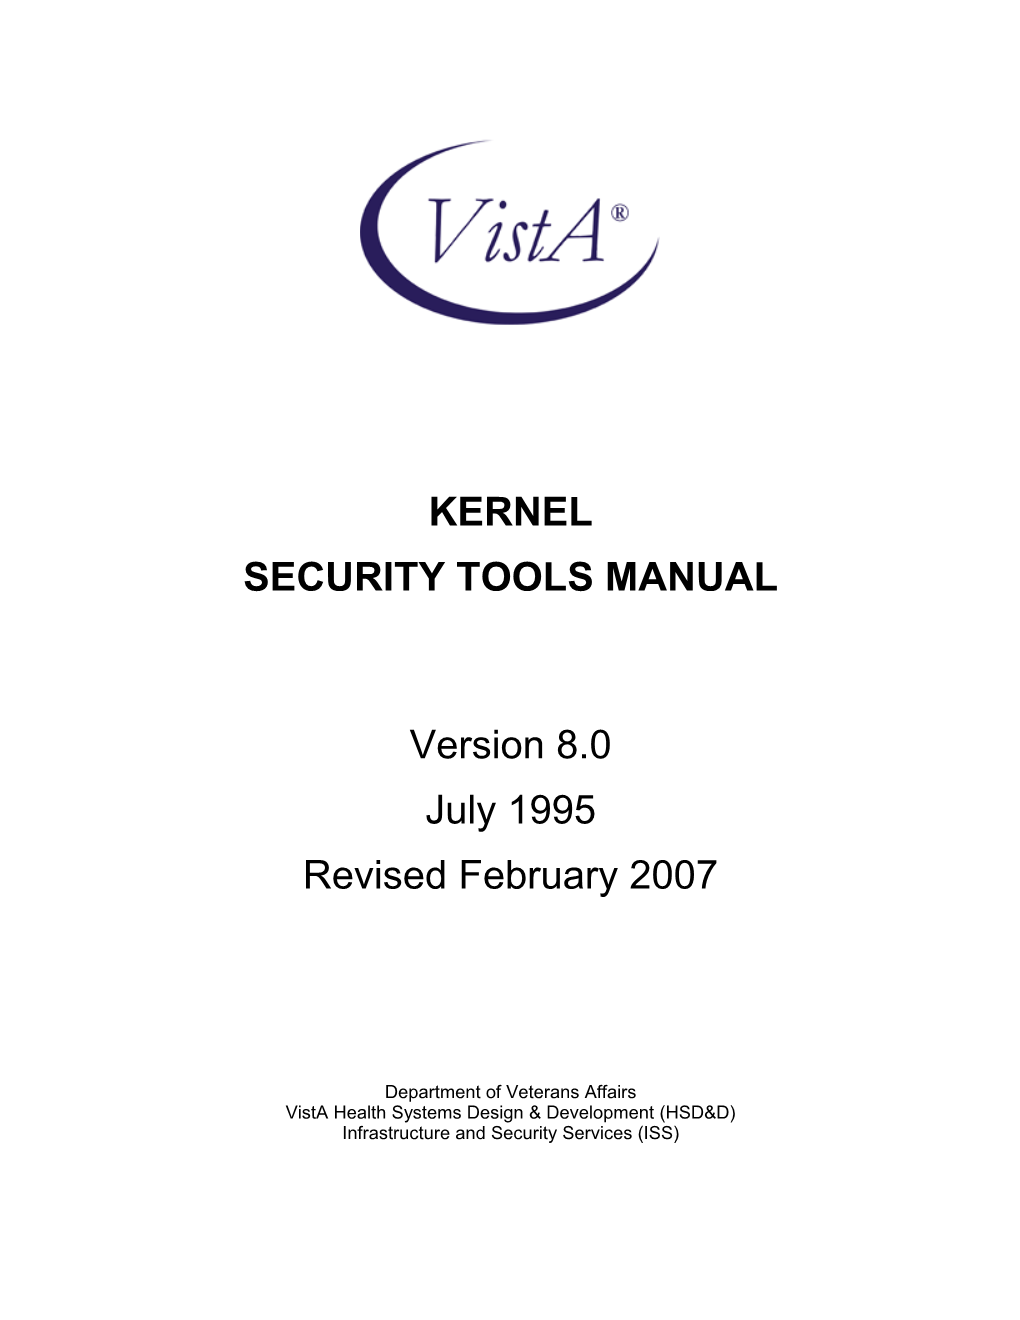 Security Tools Manual